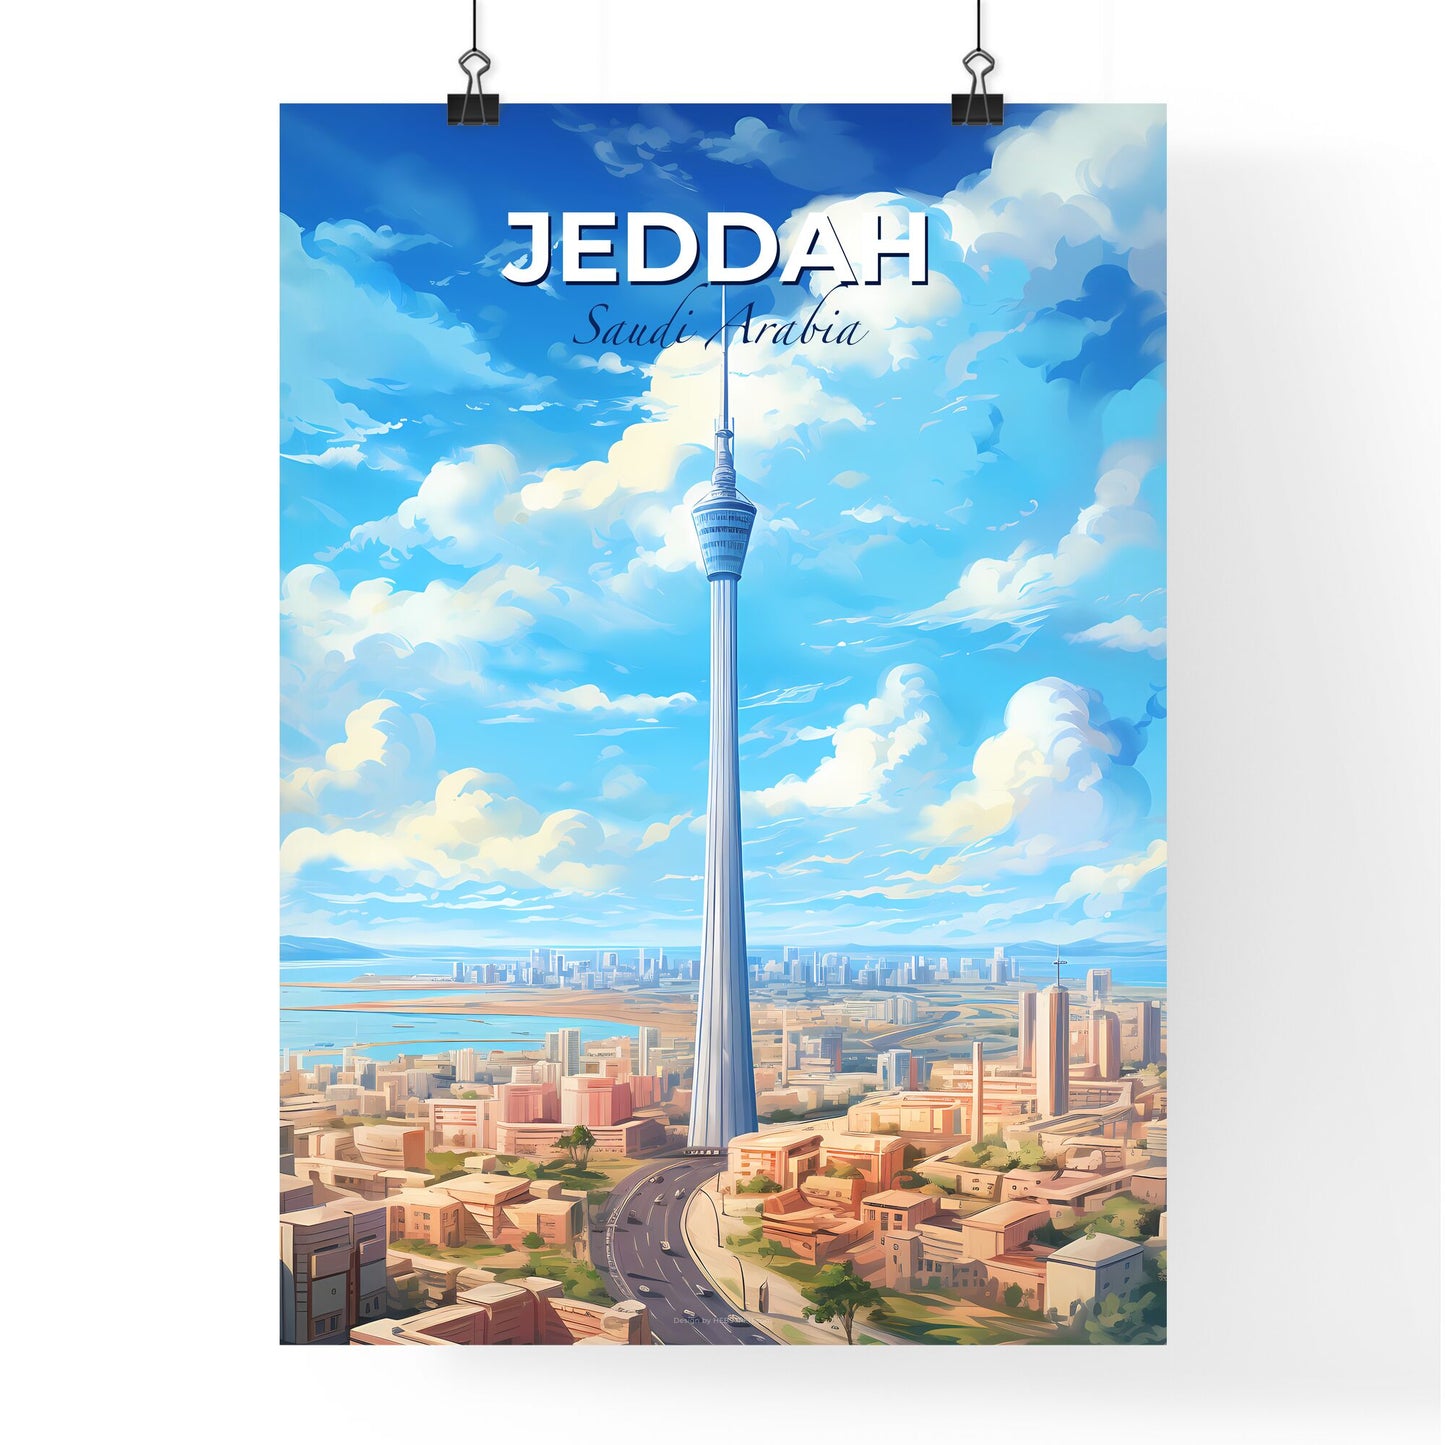 Jeddah Saudi Arabia Skyline - A Large Tower In A City - Customizable Travel Gift Default Title